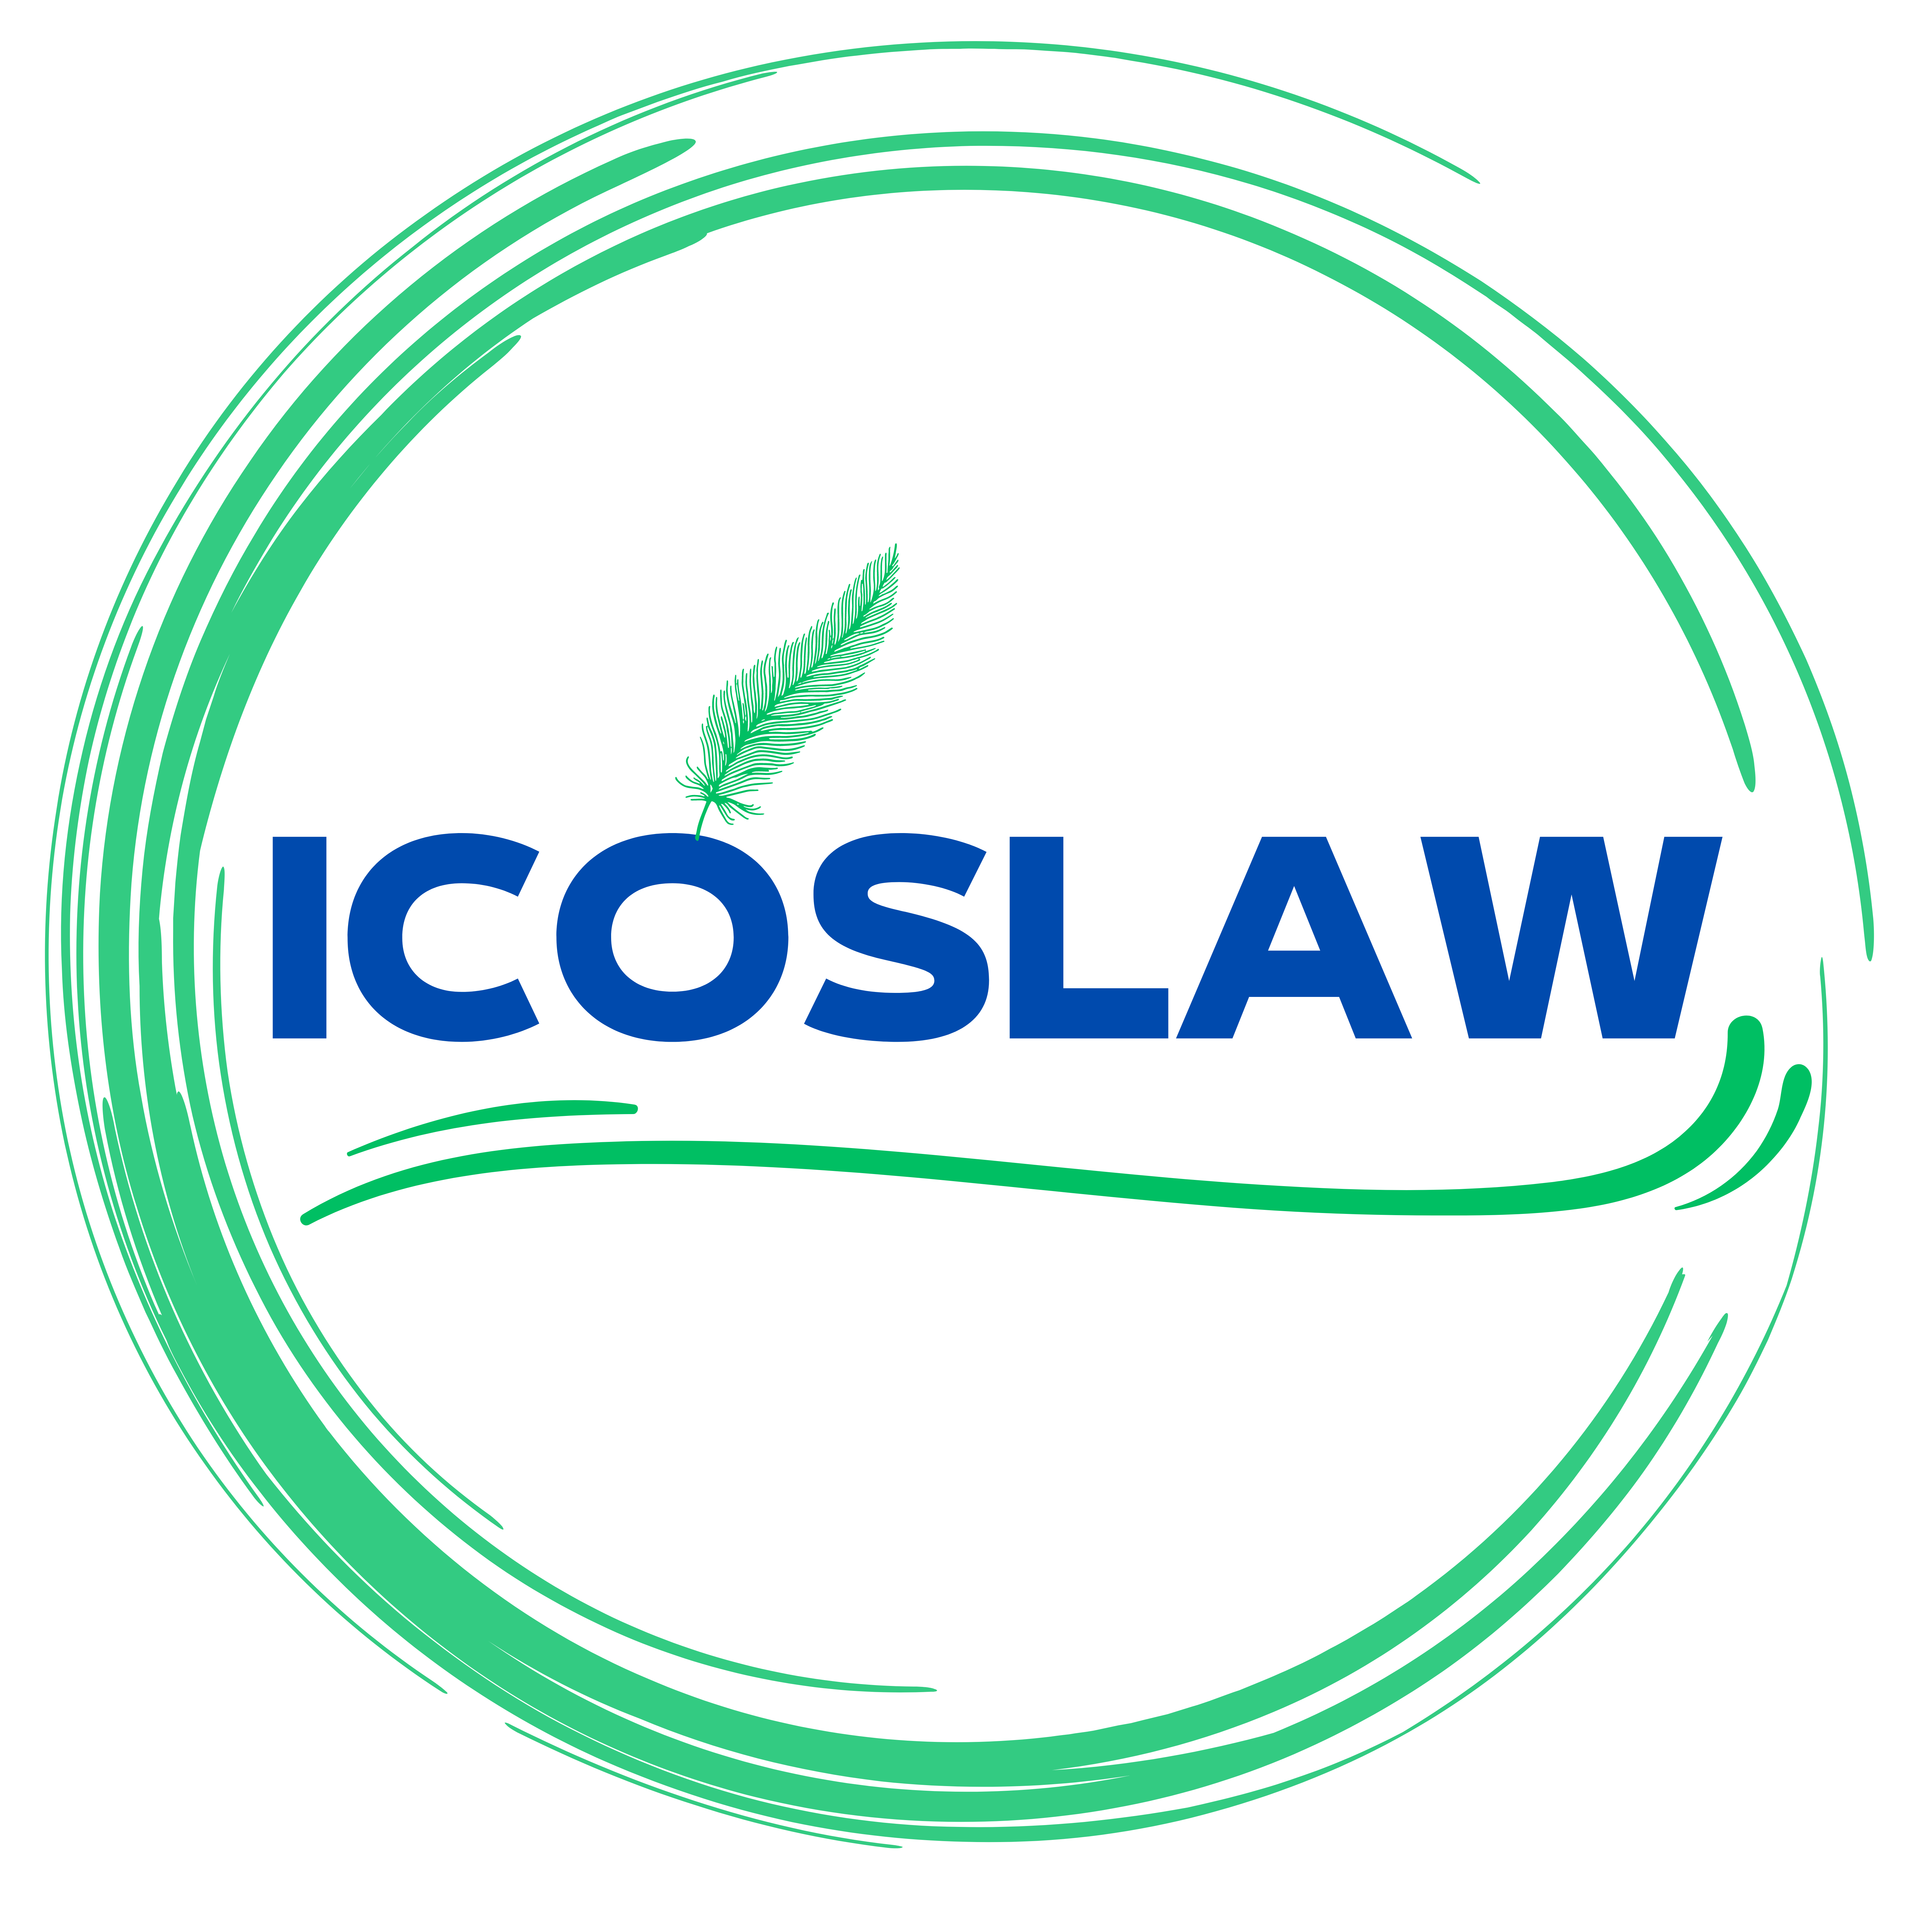 ICosLaw